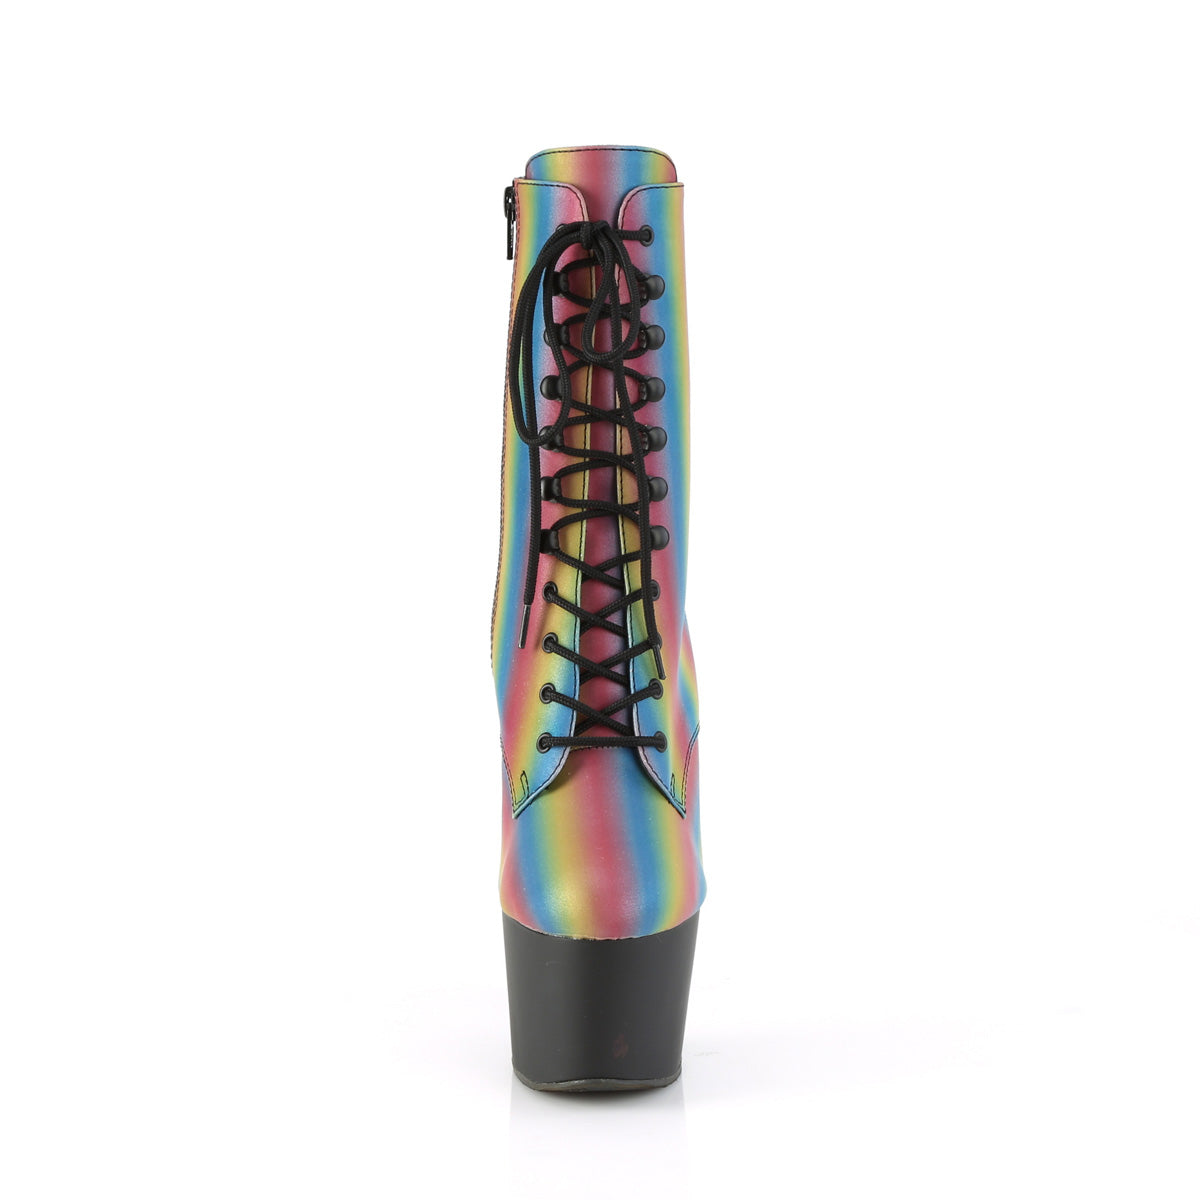 ADORE-1020REFL-02 Pleaser Rainbow Reflective/Black Matte Platform Shoes [Sexy Ankle Boots]